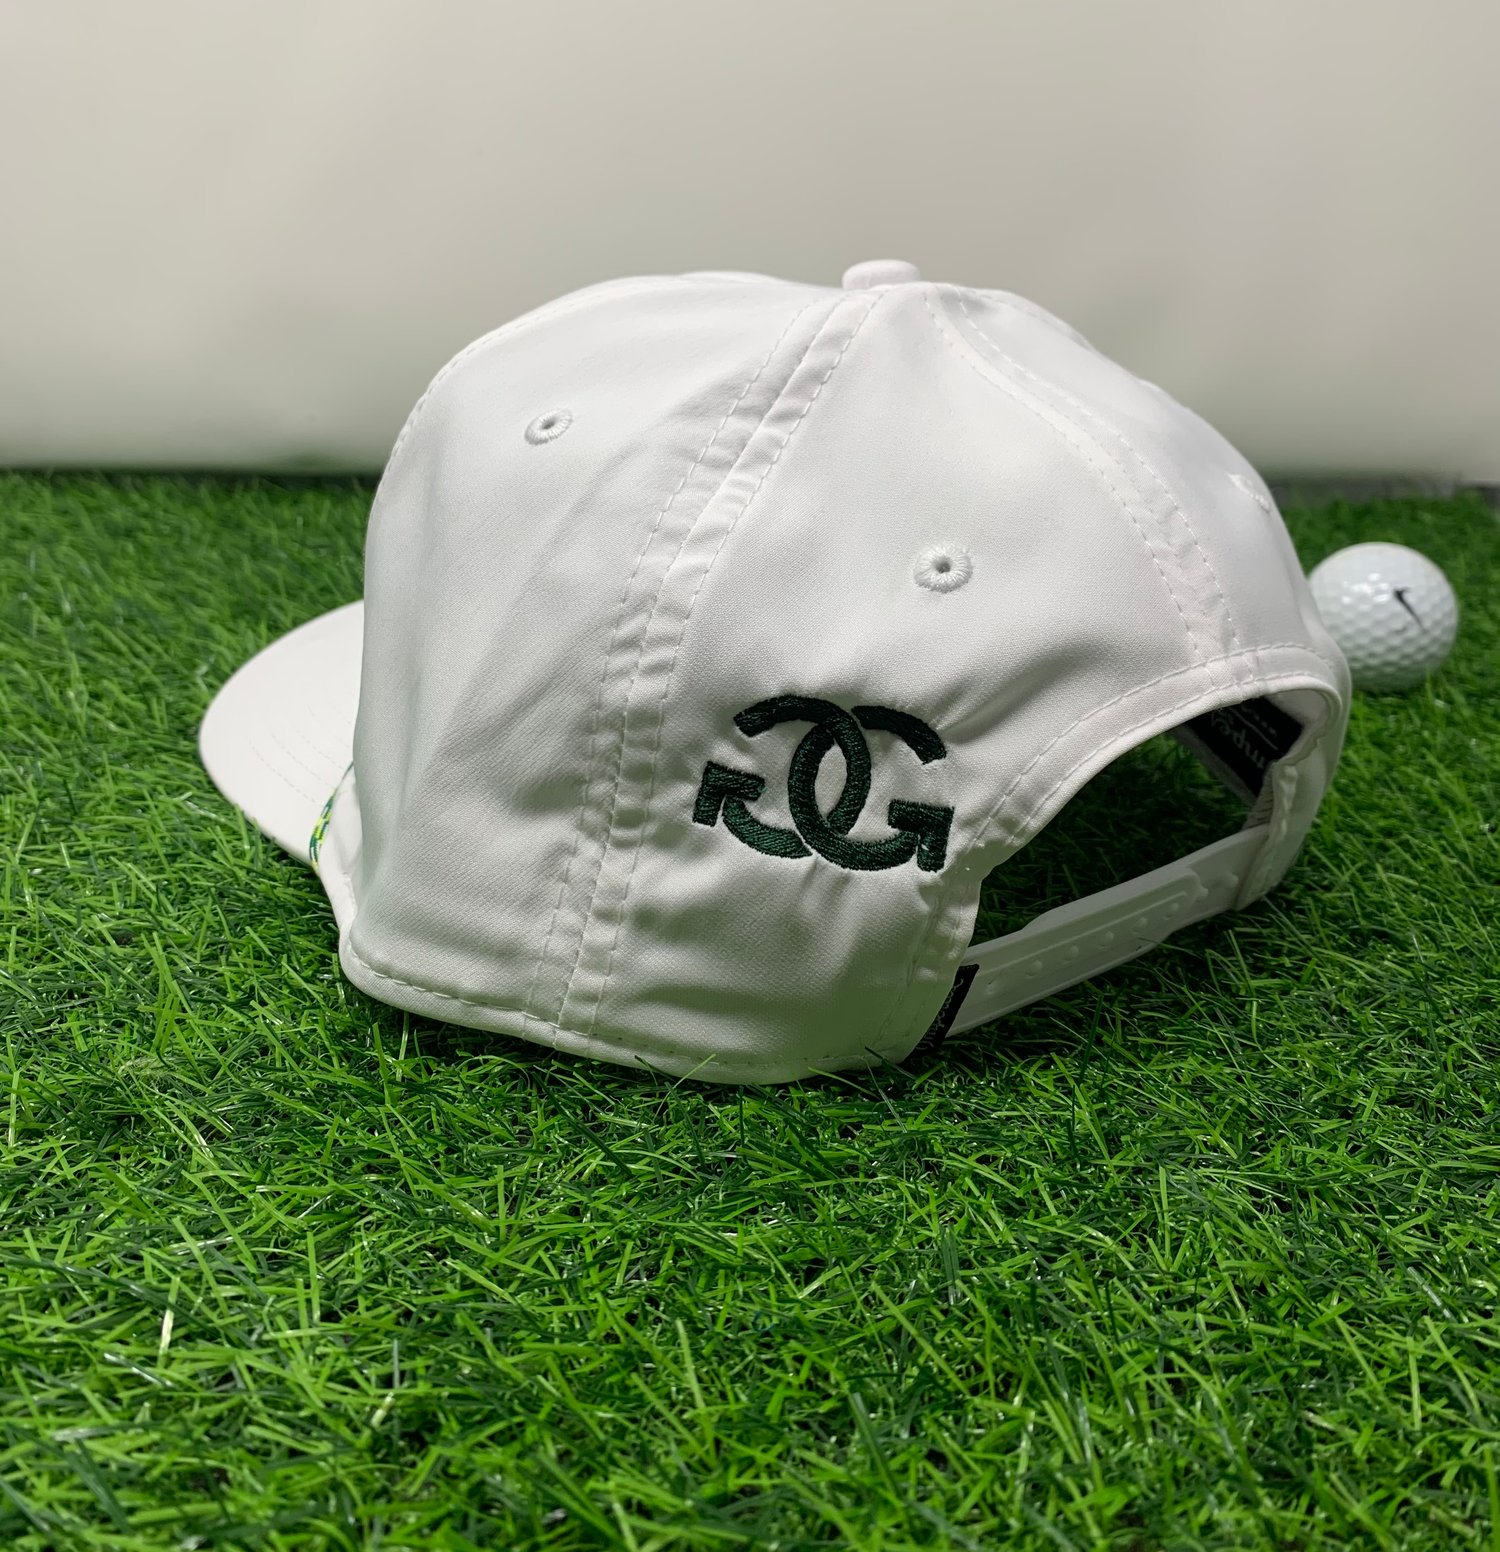 Image of Metal Masters Golf Hat